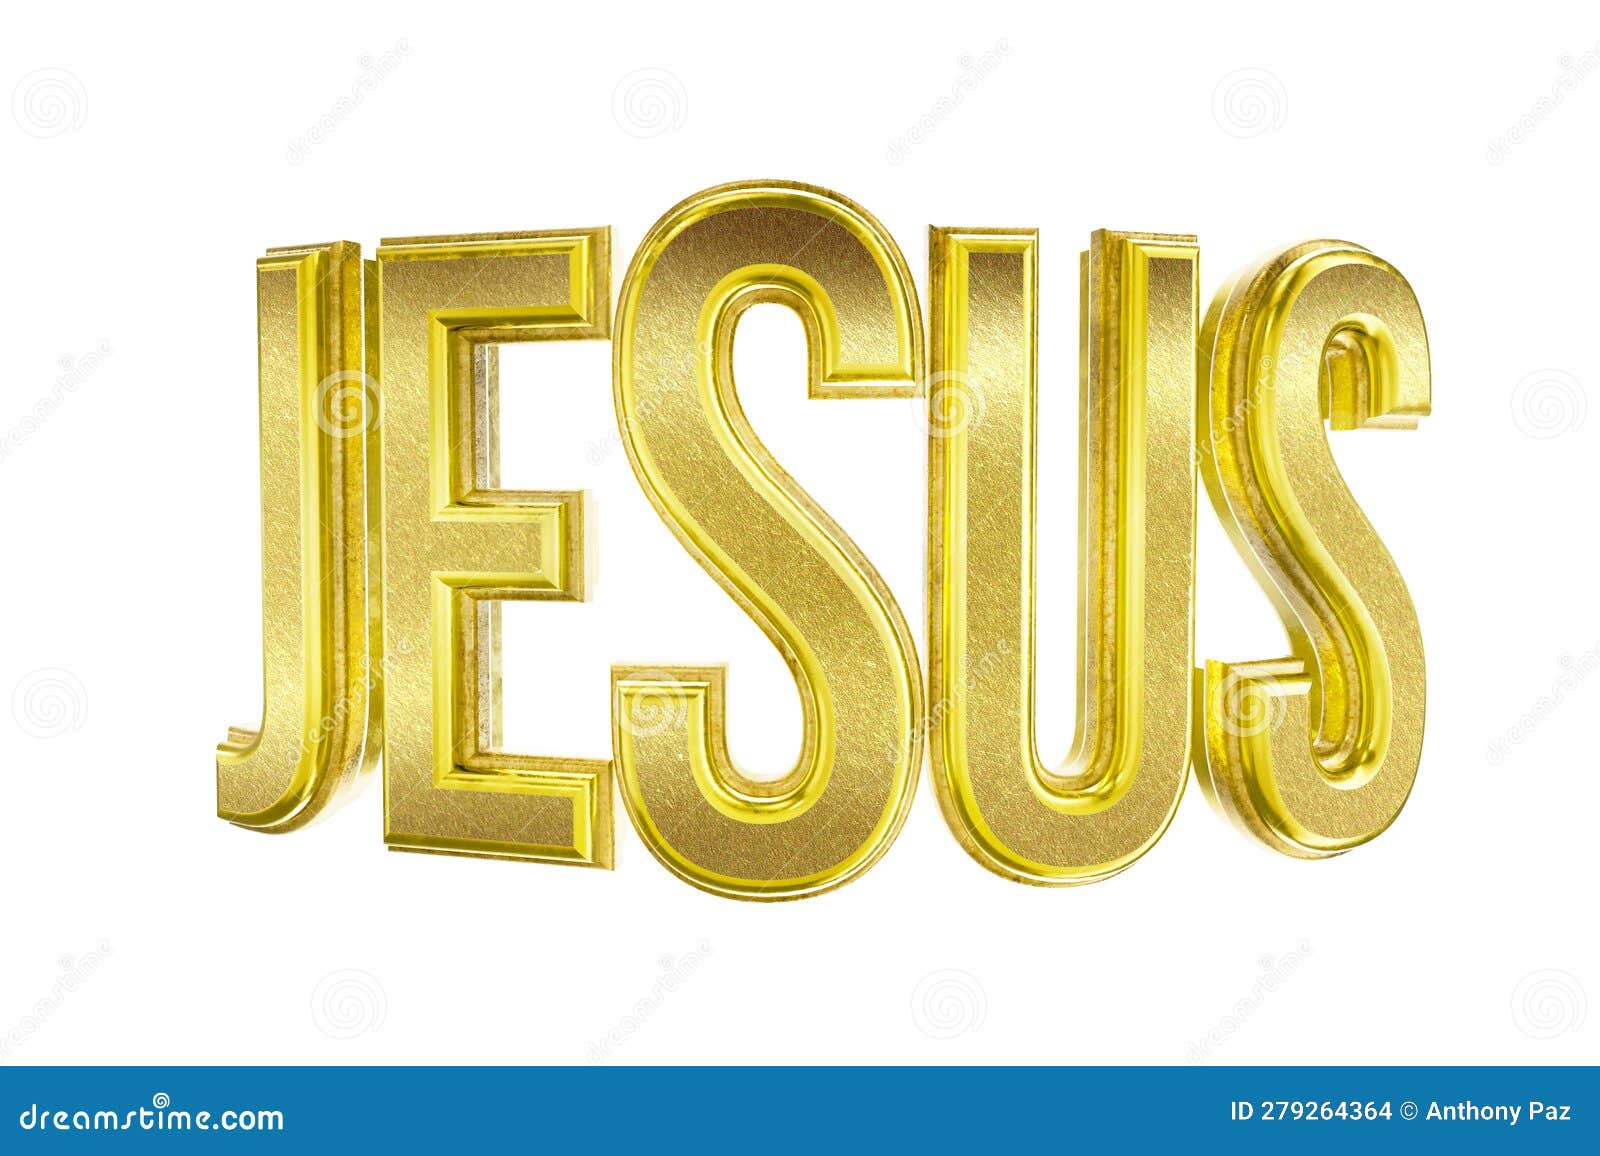 Word Jesus Written in Gold in a 3d Render Stock Illustration ...